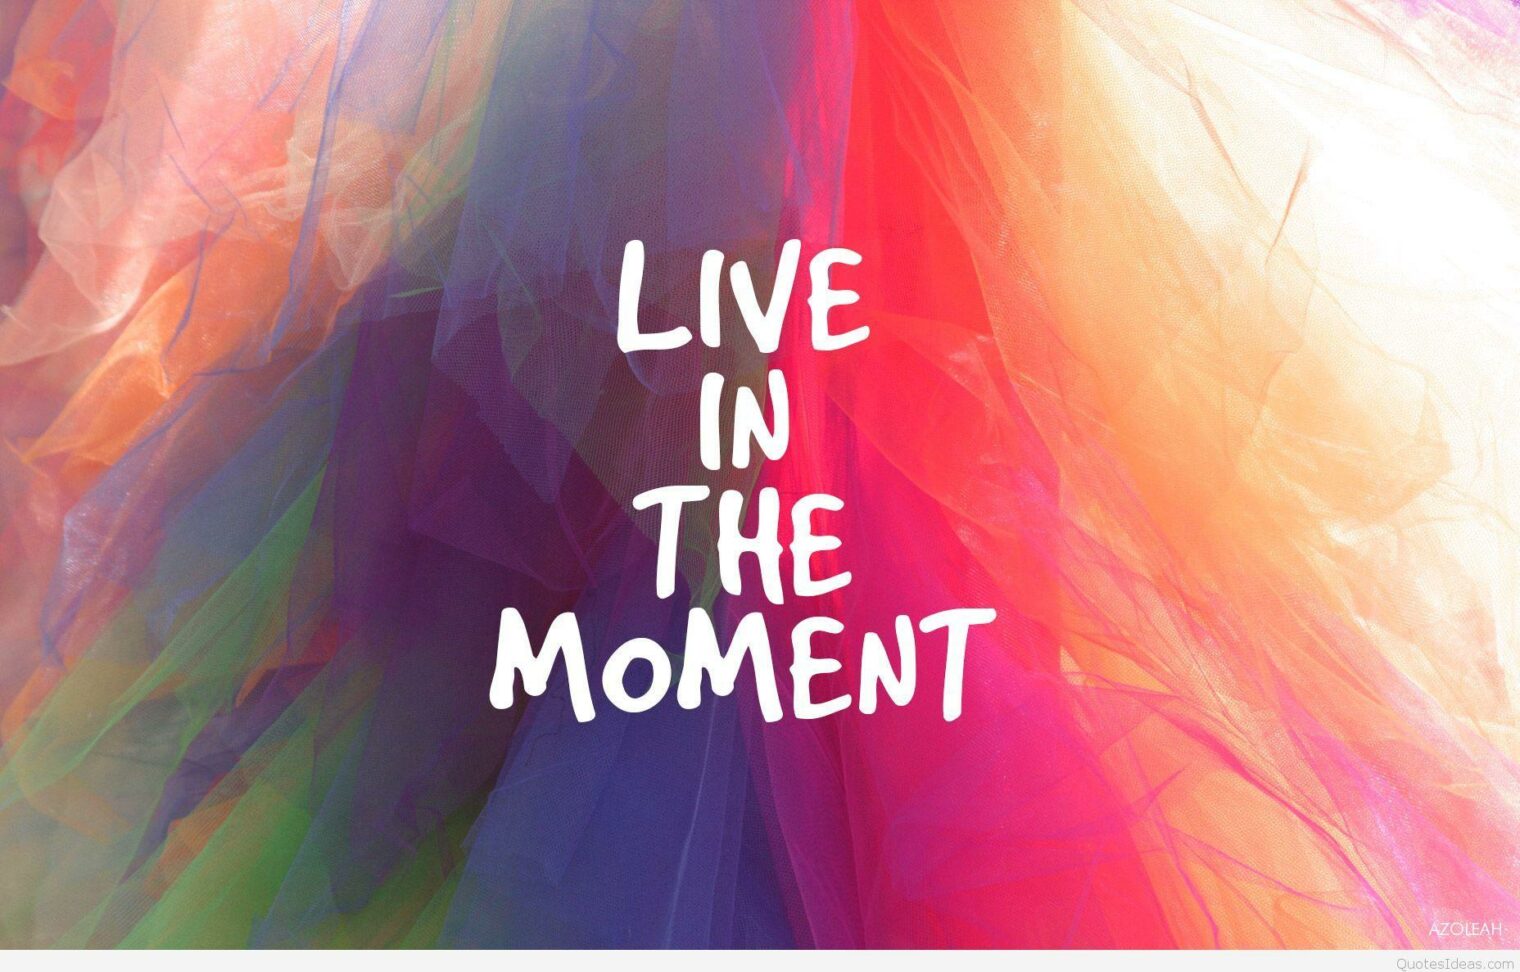 Live your ways. Красивое изображение moments. Life moments картинки. Live in the moment. Live at the moment.